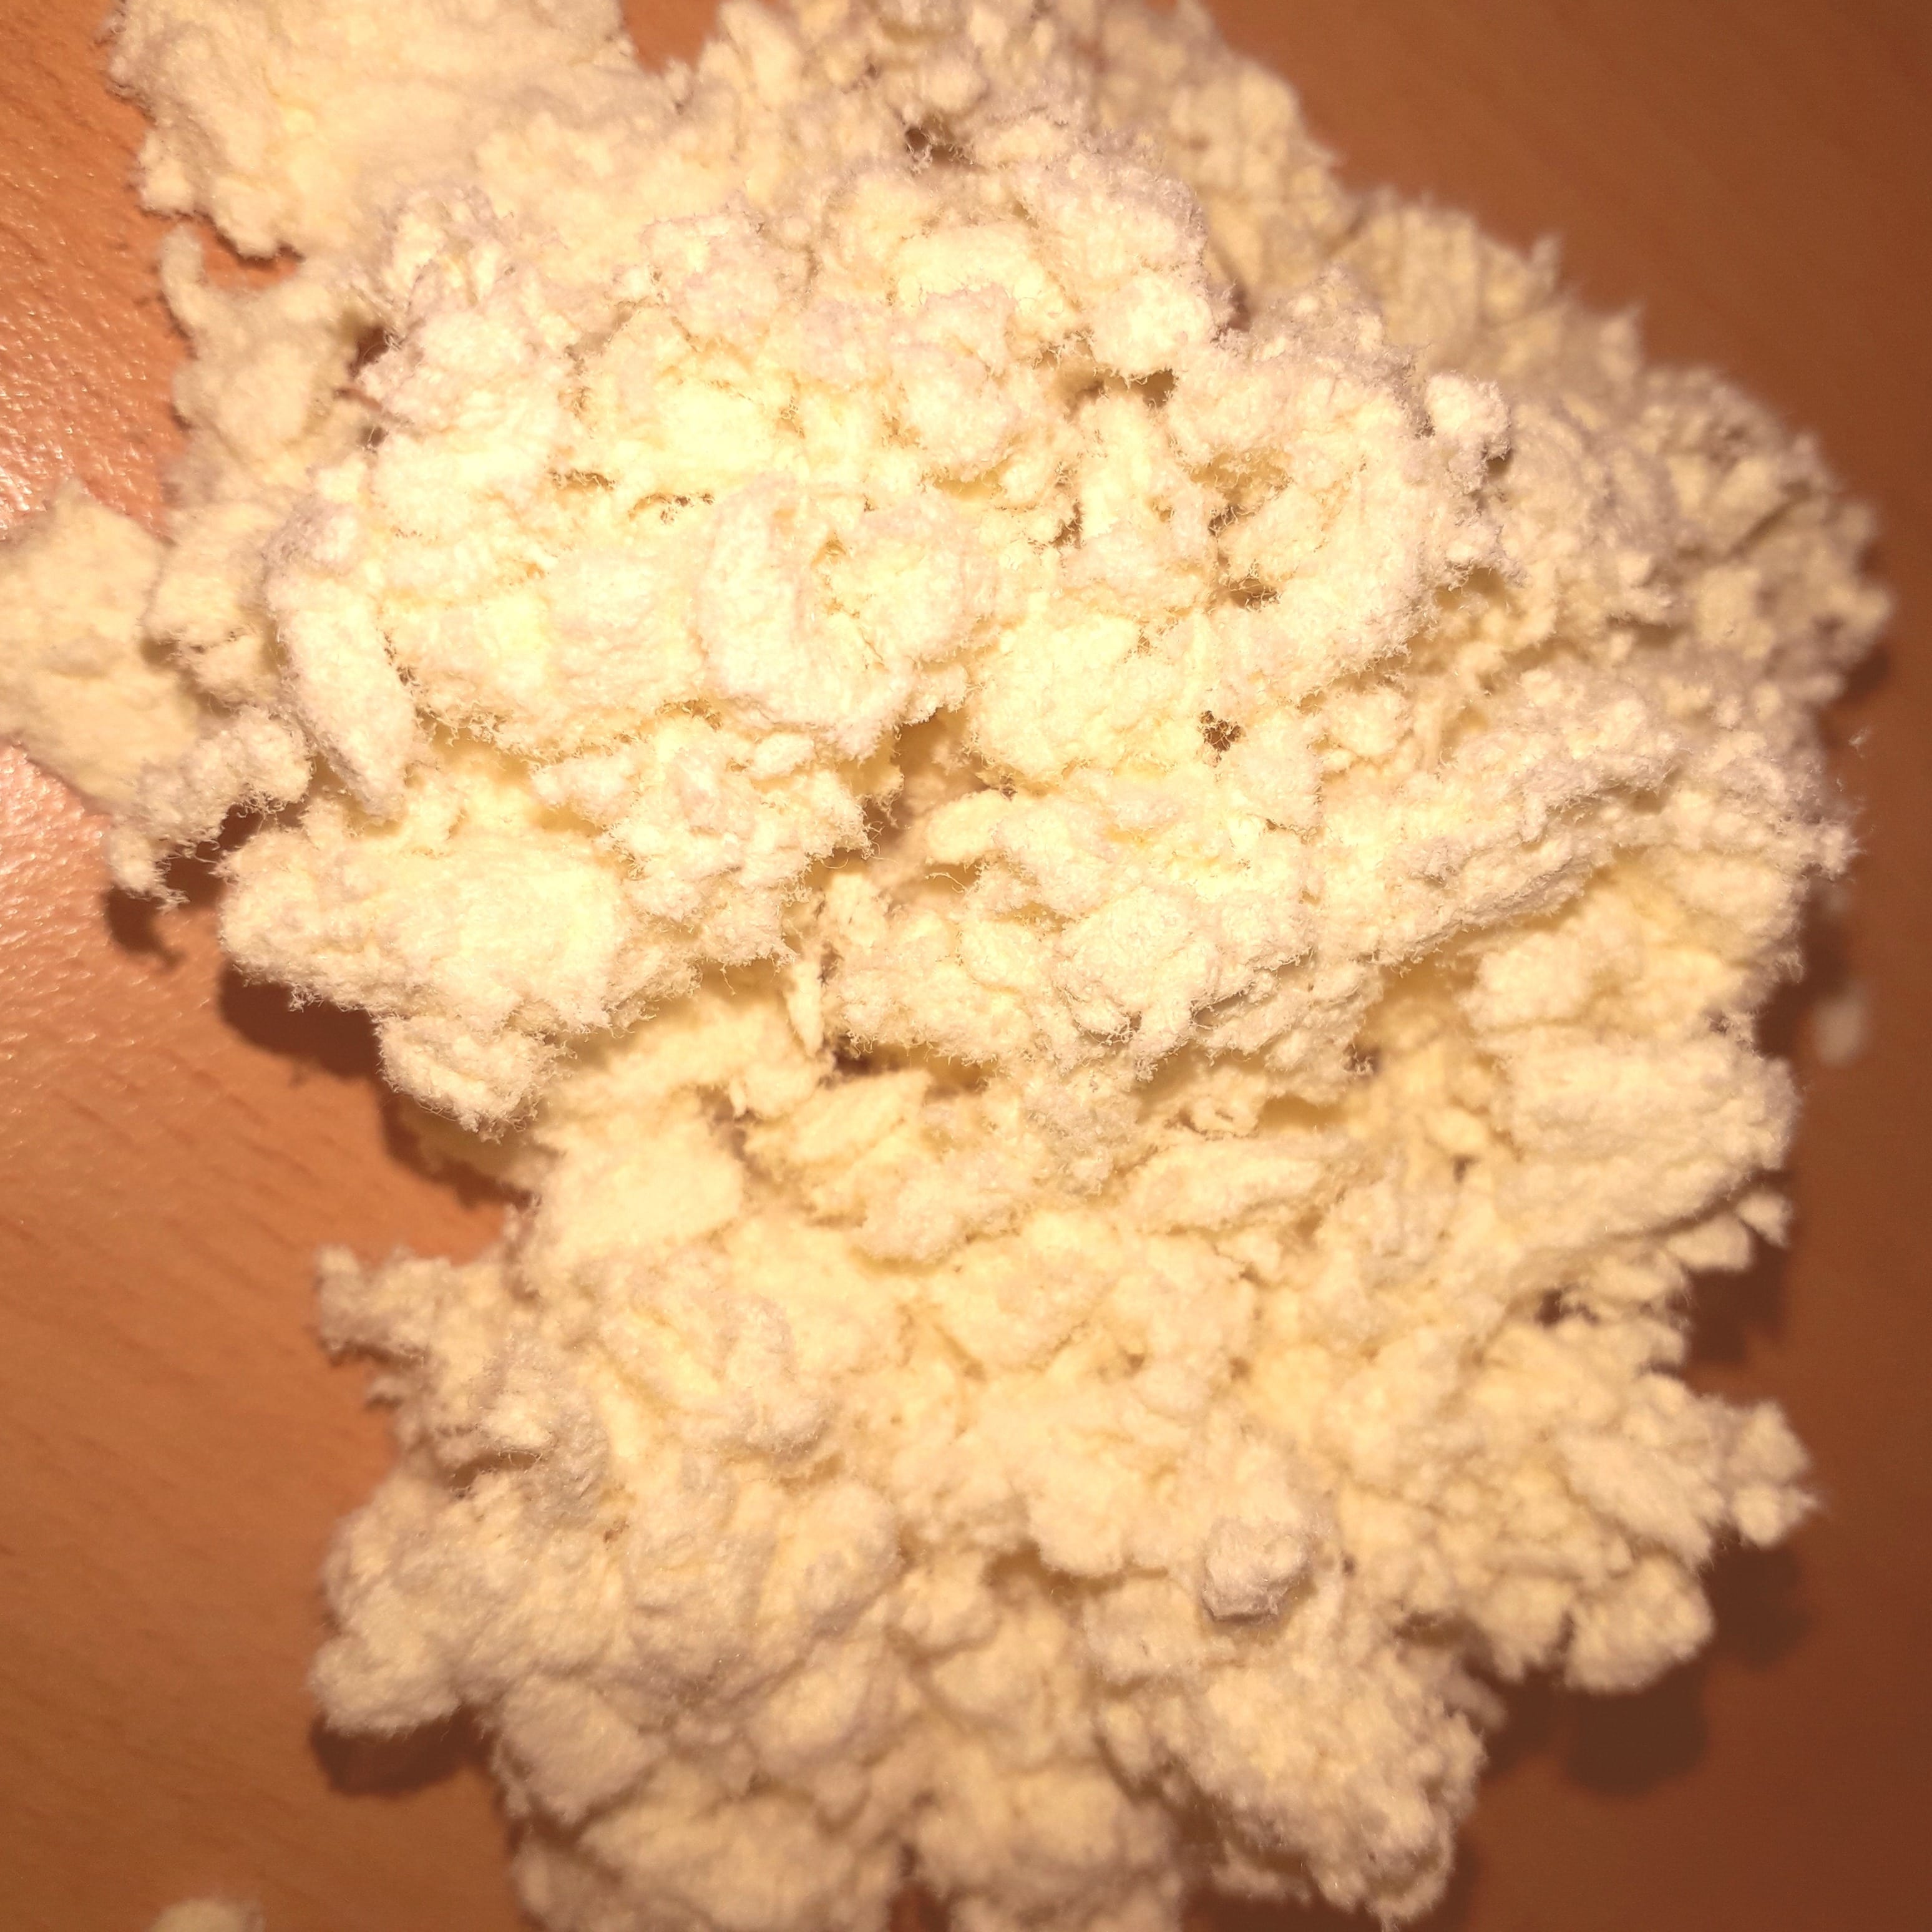 Aramid in pulp of fibers (virgin or recycled)